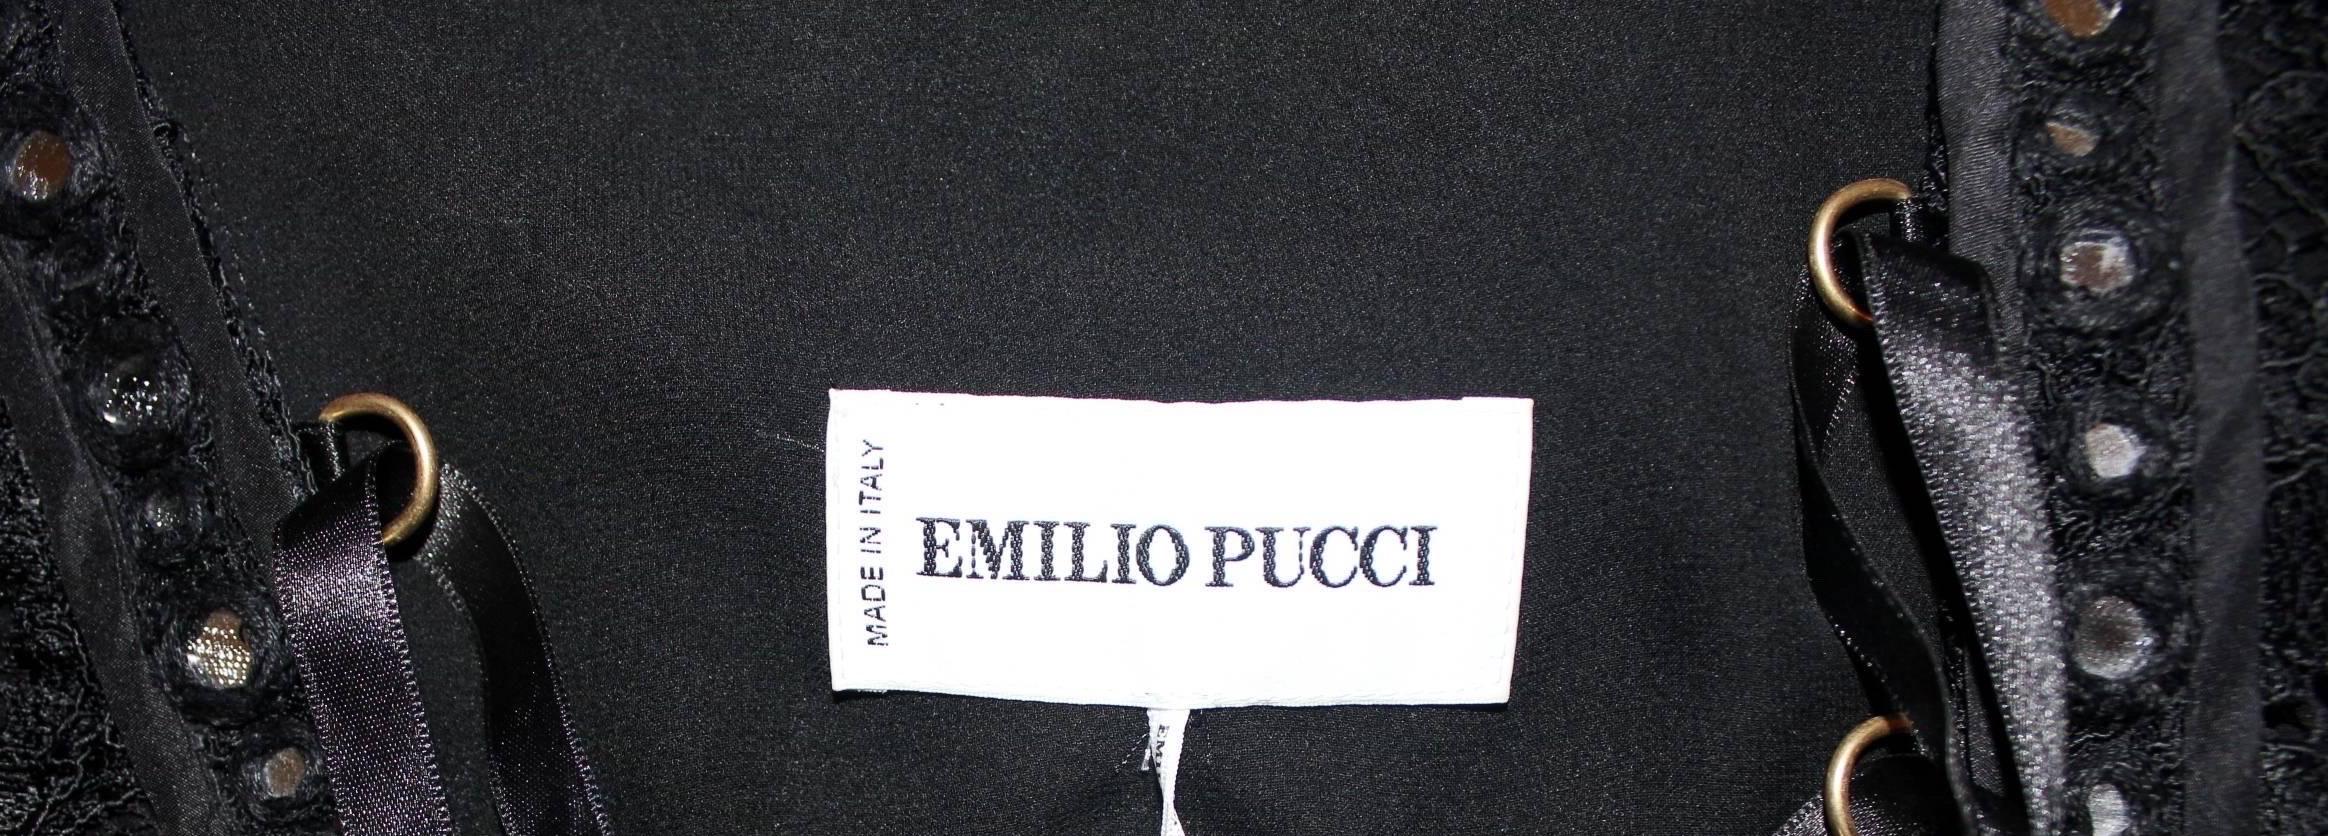 UNWORN Emilio Pucci by Peter Dundas Black Lace Mirror Lace Up Dress 38 For Sale 2